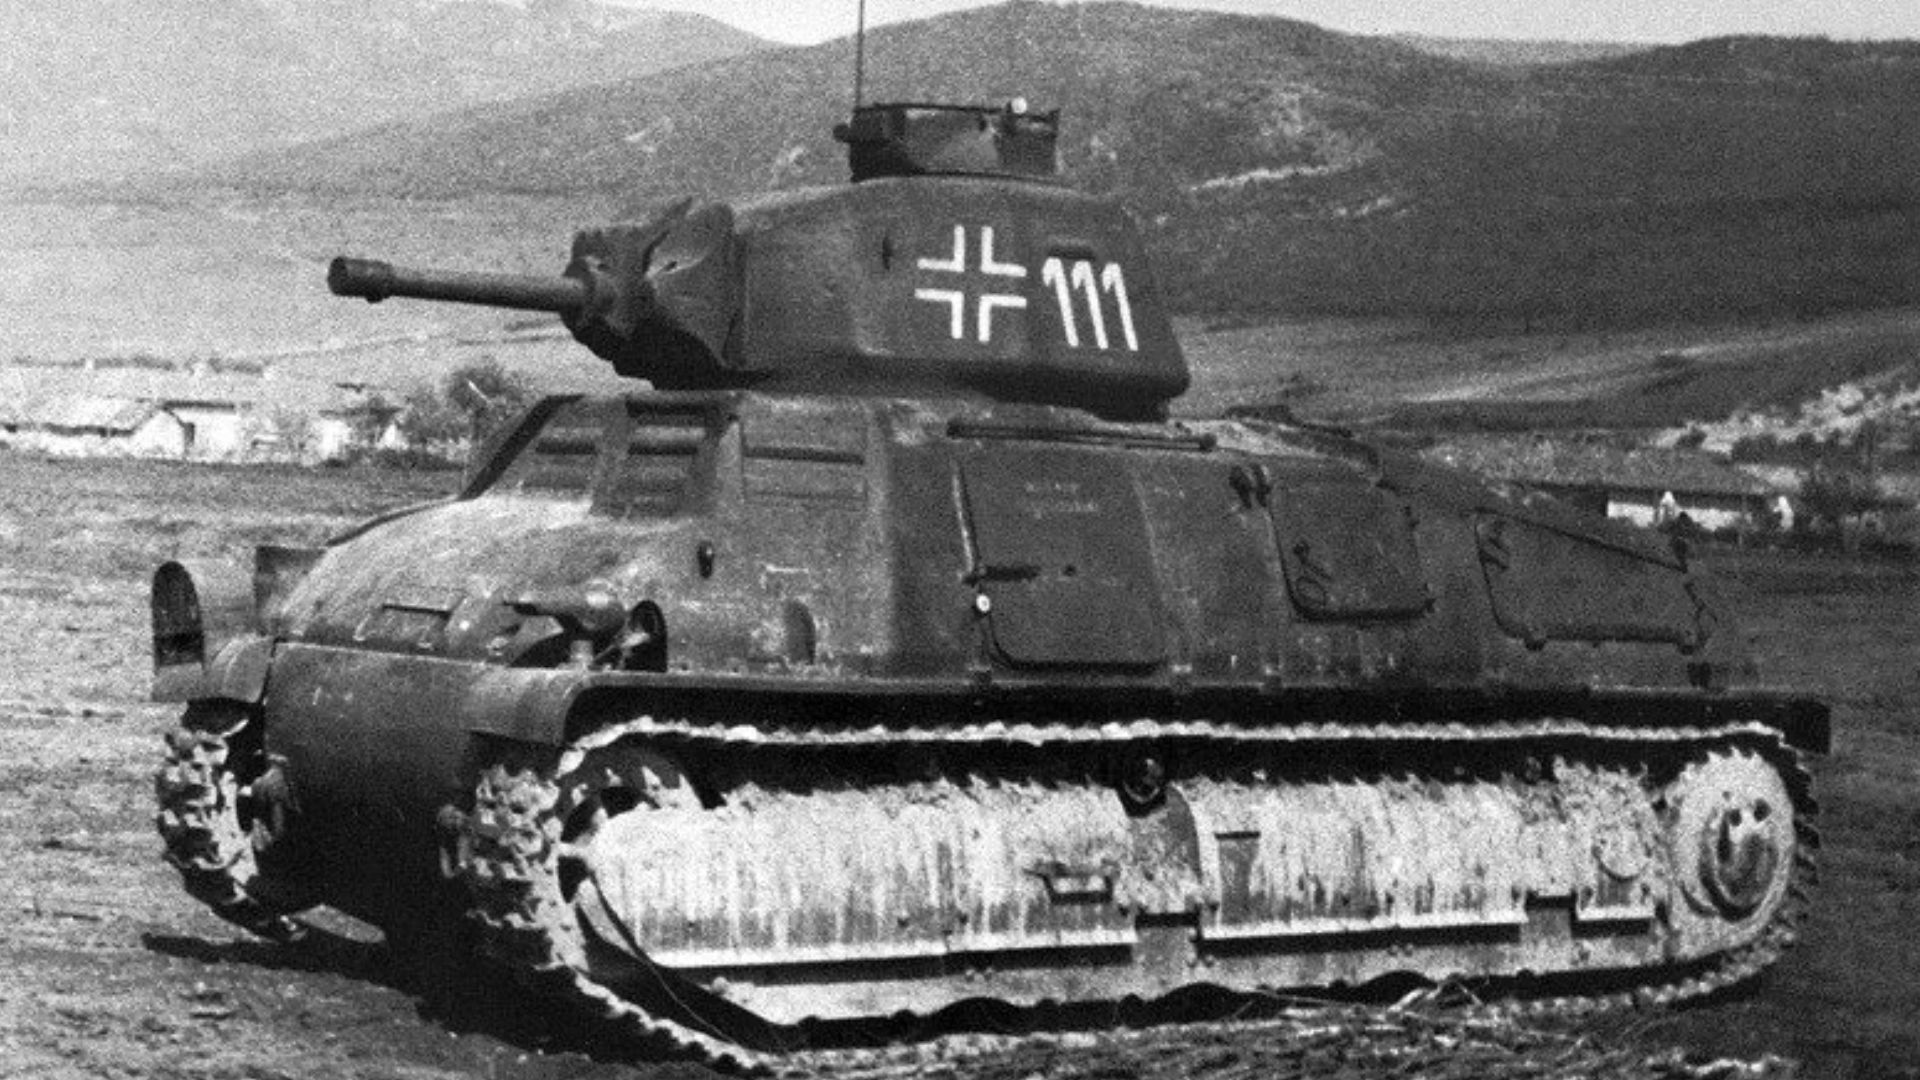 25th Panzer Division (wehrmacht)